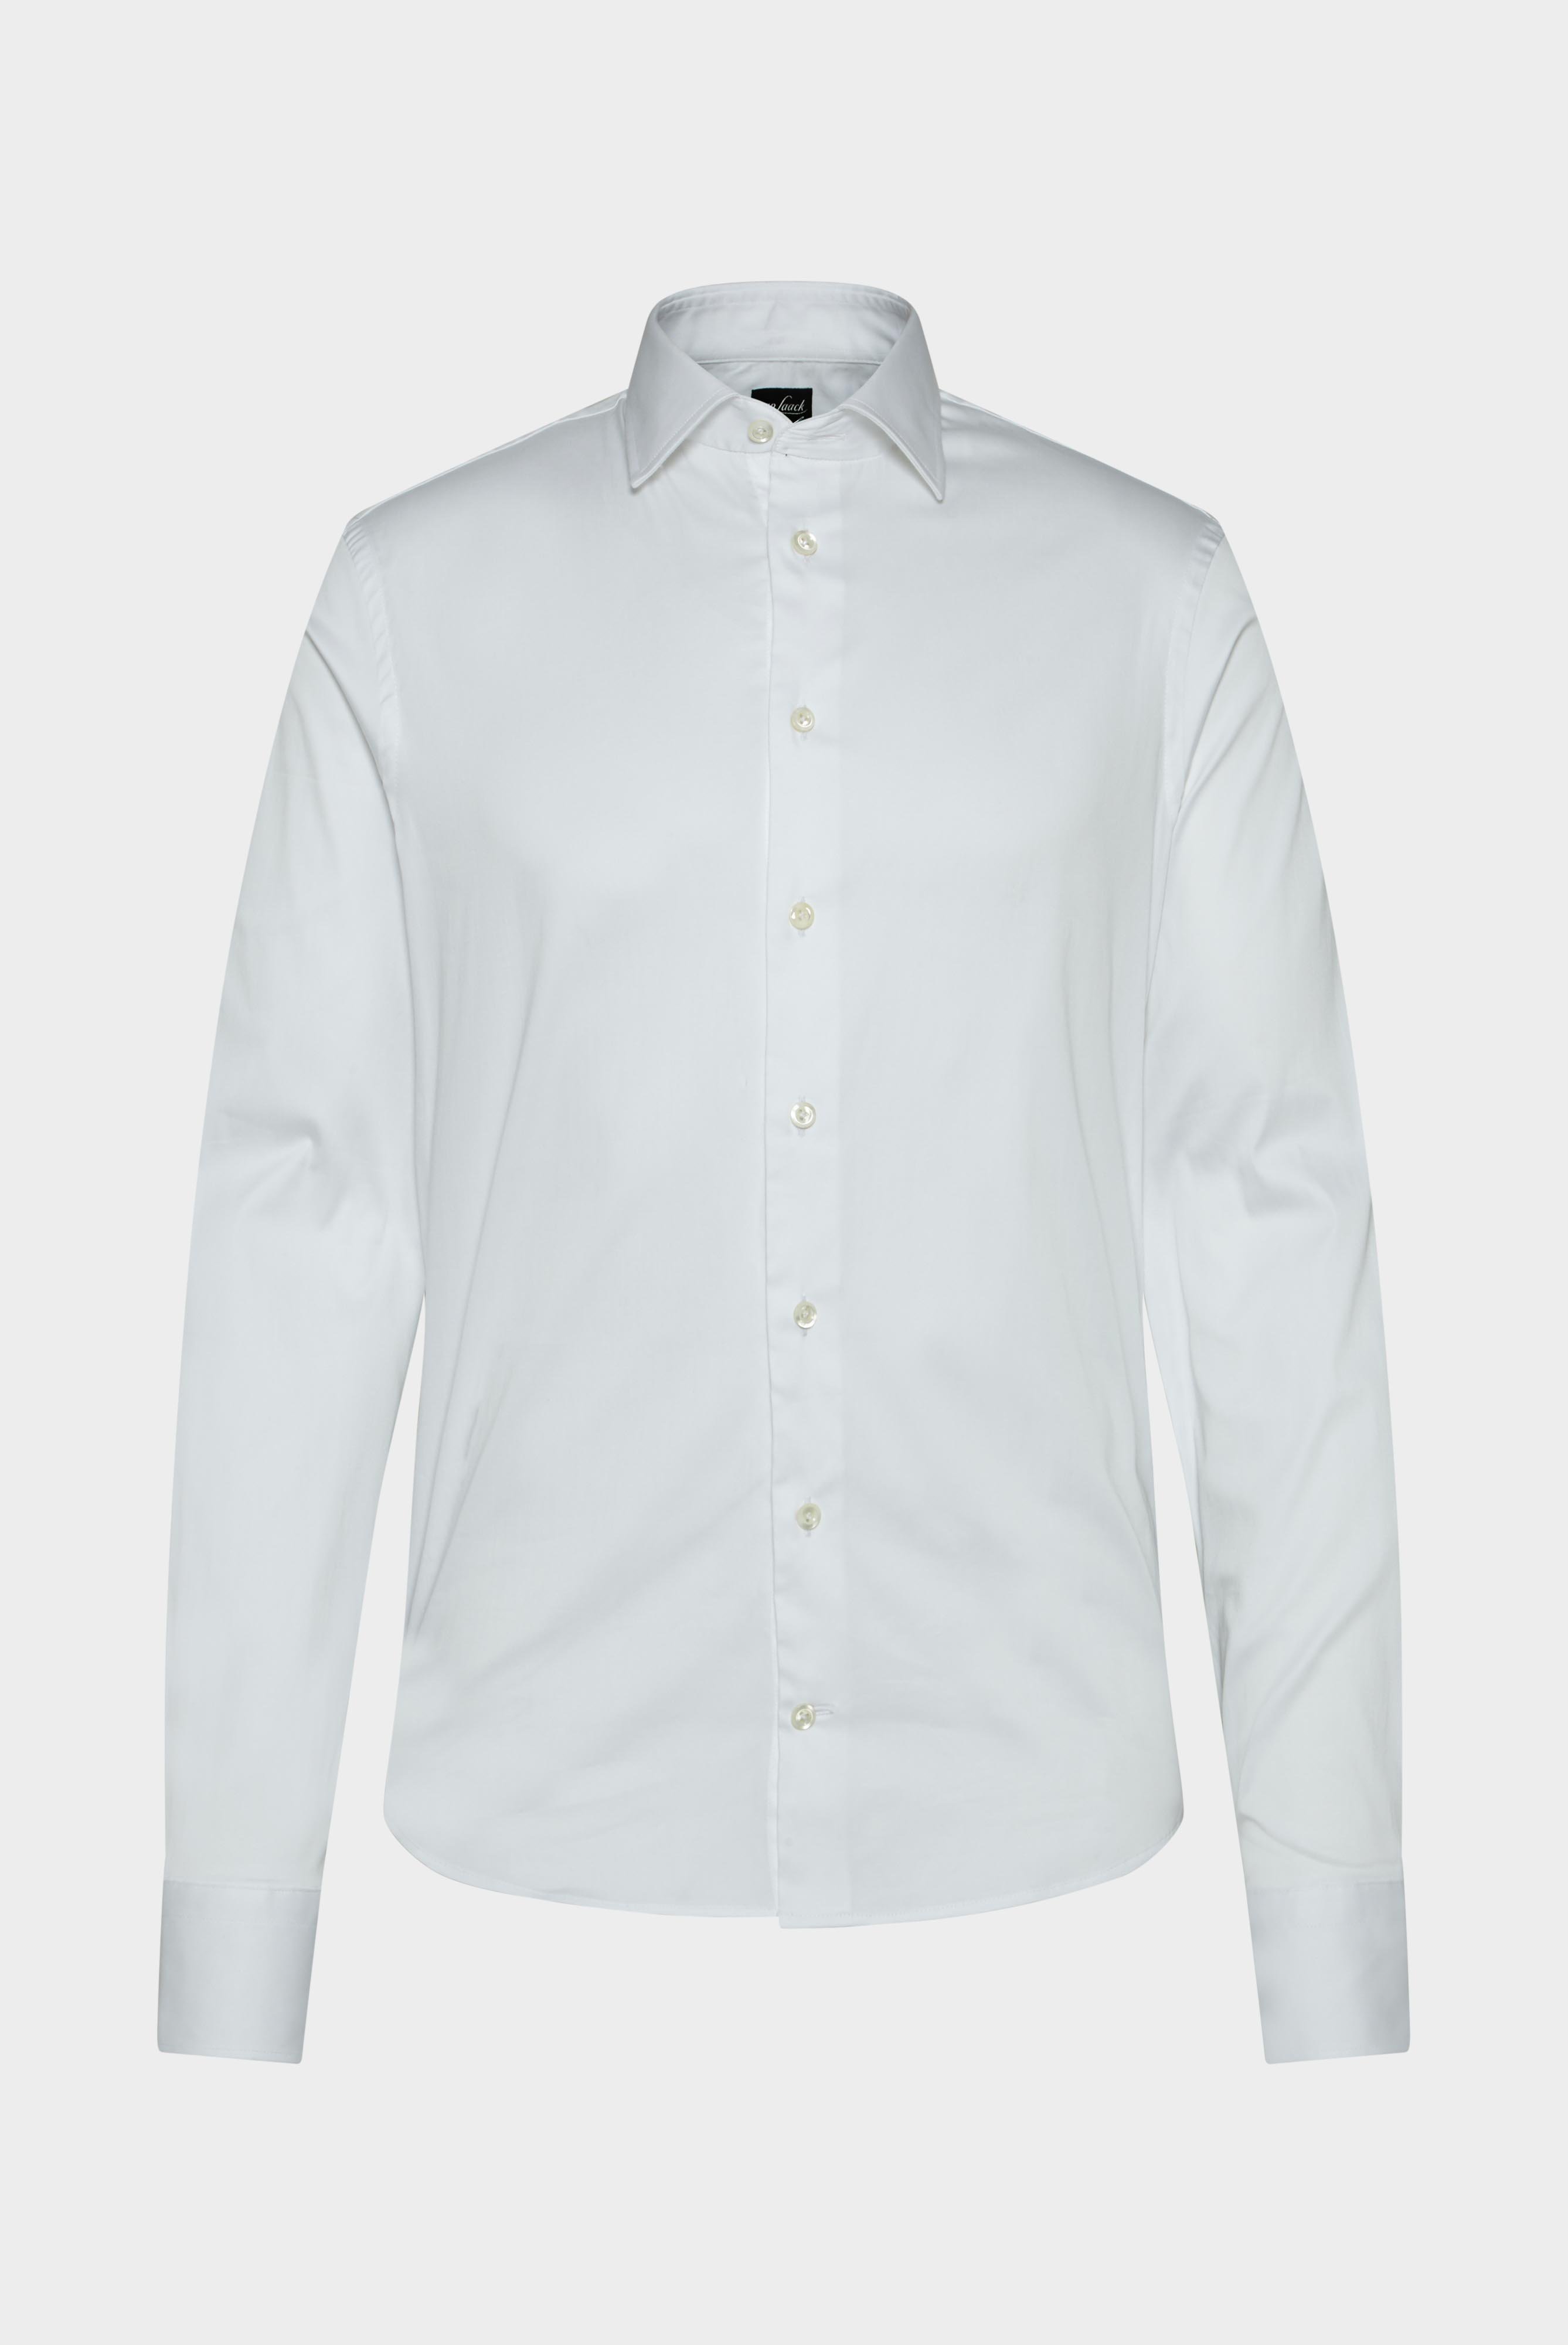 Business Shirts+Cotton Stretch Poplin Shirt+20.2010.NV.130830.000.41